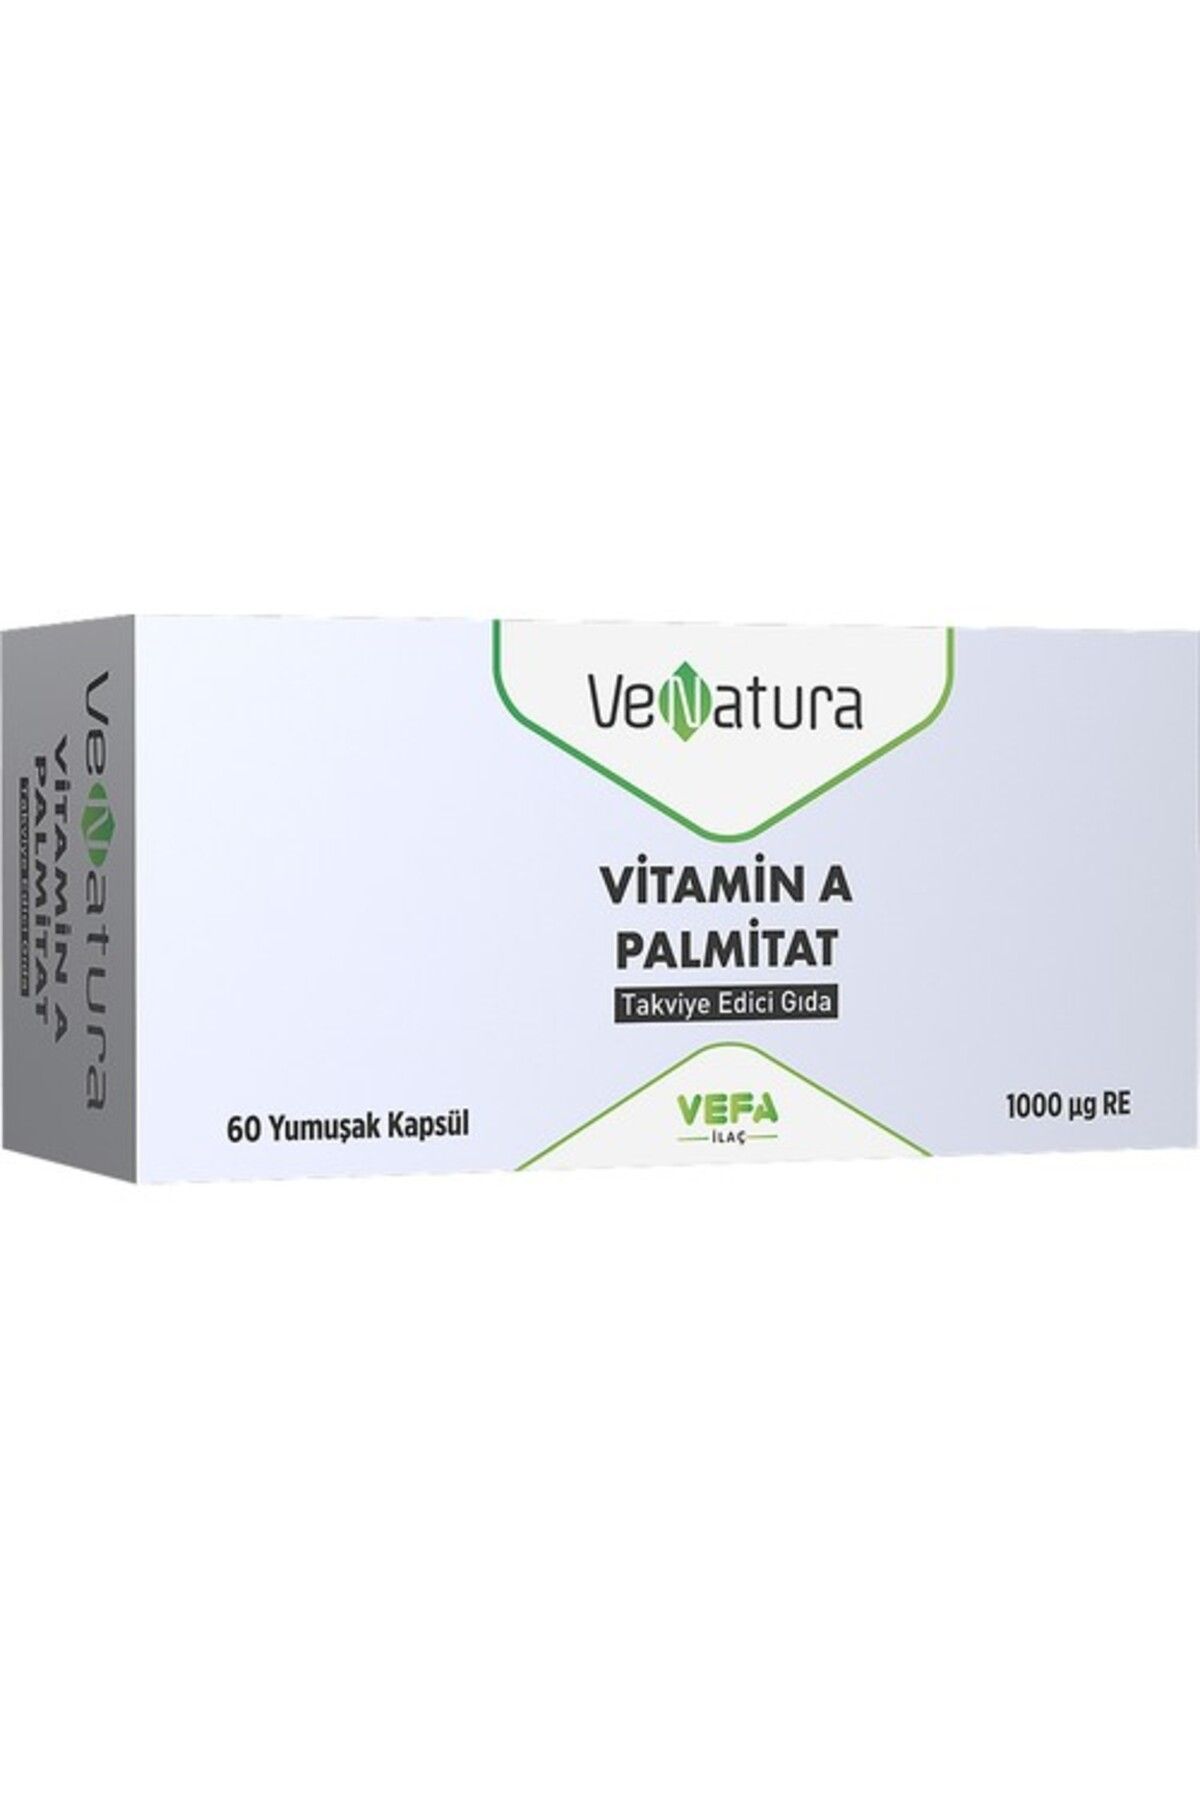 Venatura Vitamin A Palmitat 60 Yumuşak Kapsül